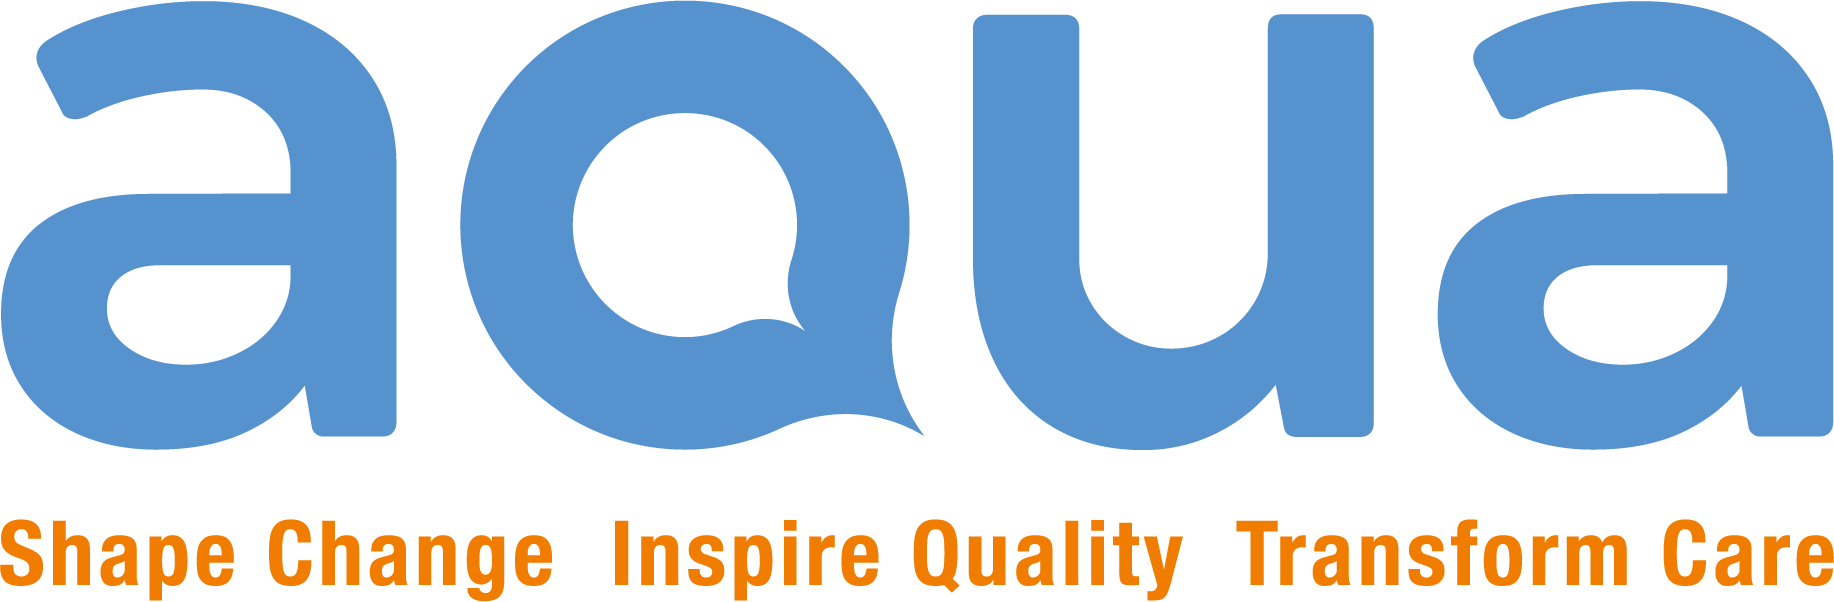 Advancing Quality Alliance Logo